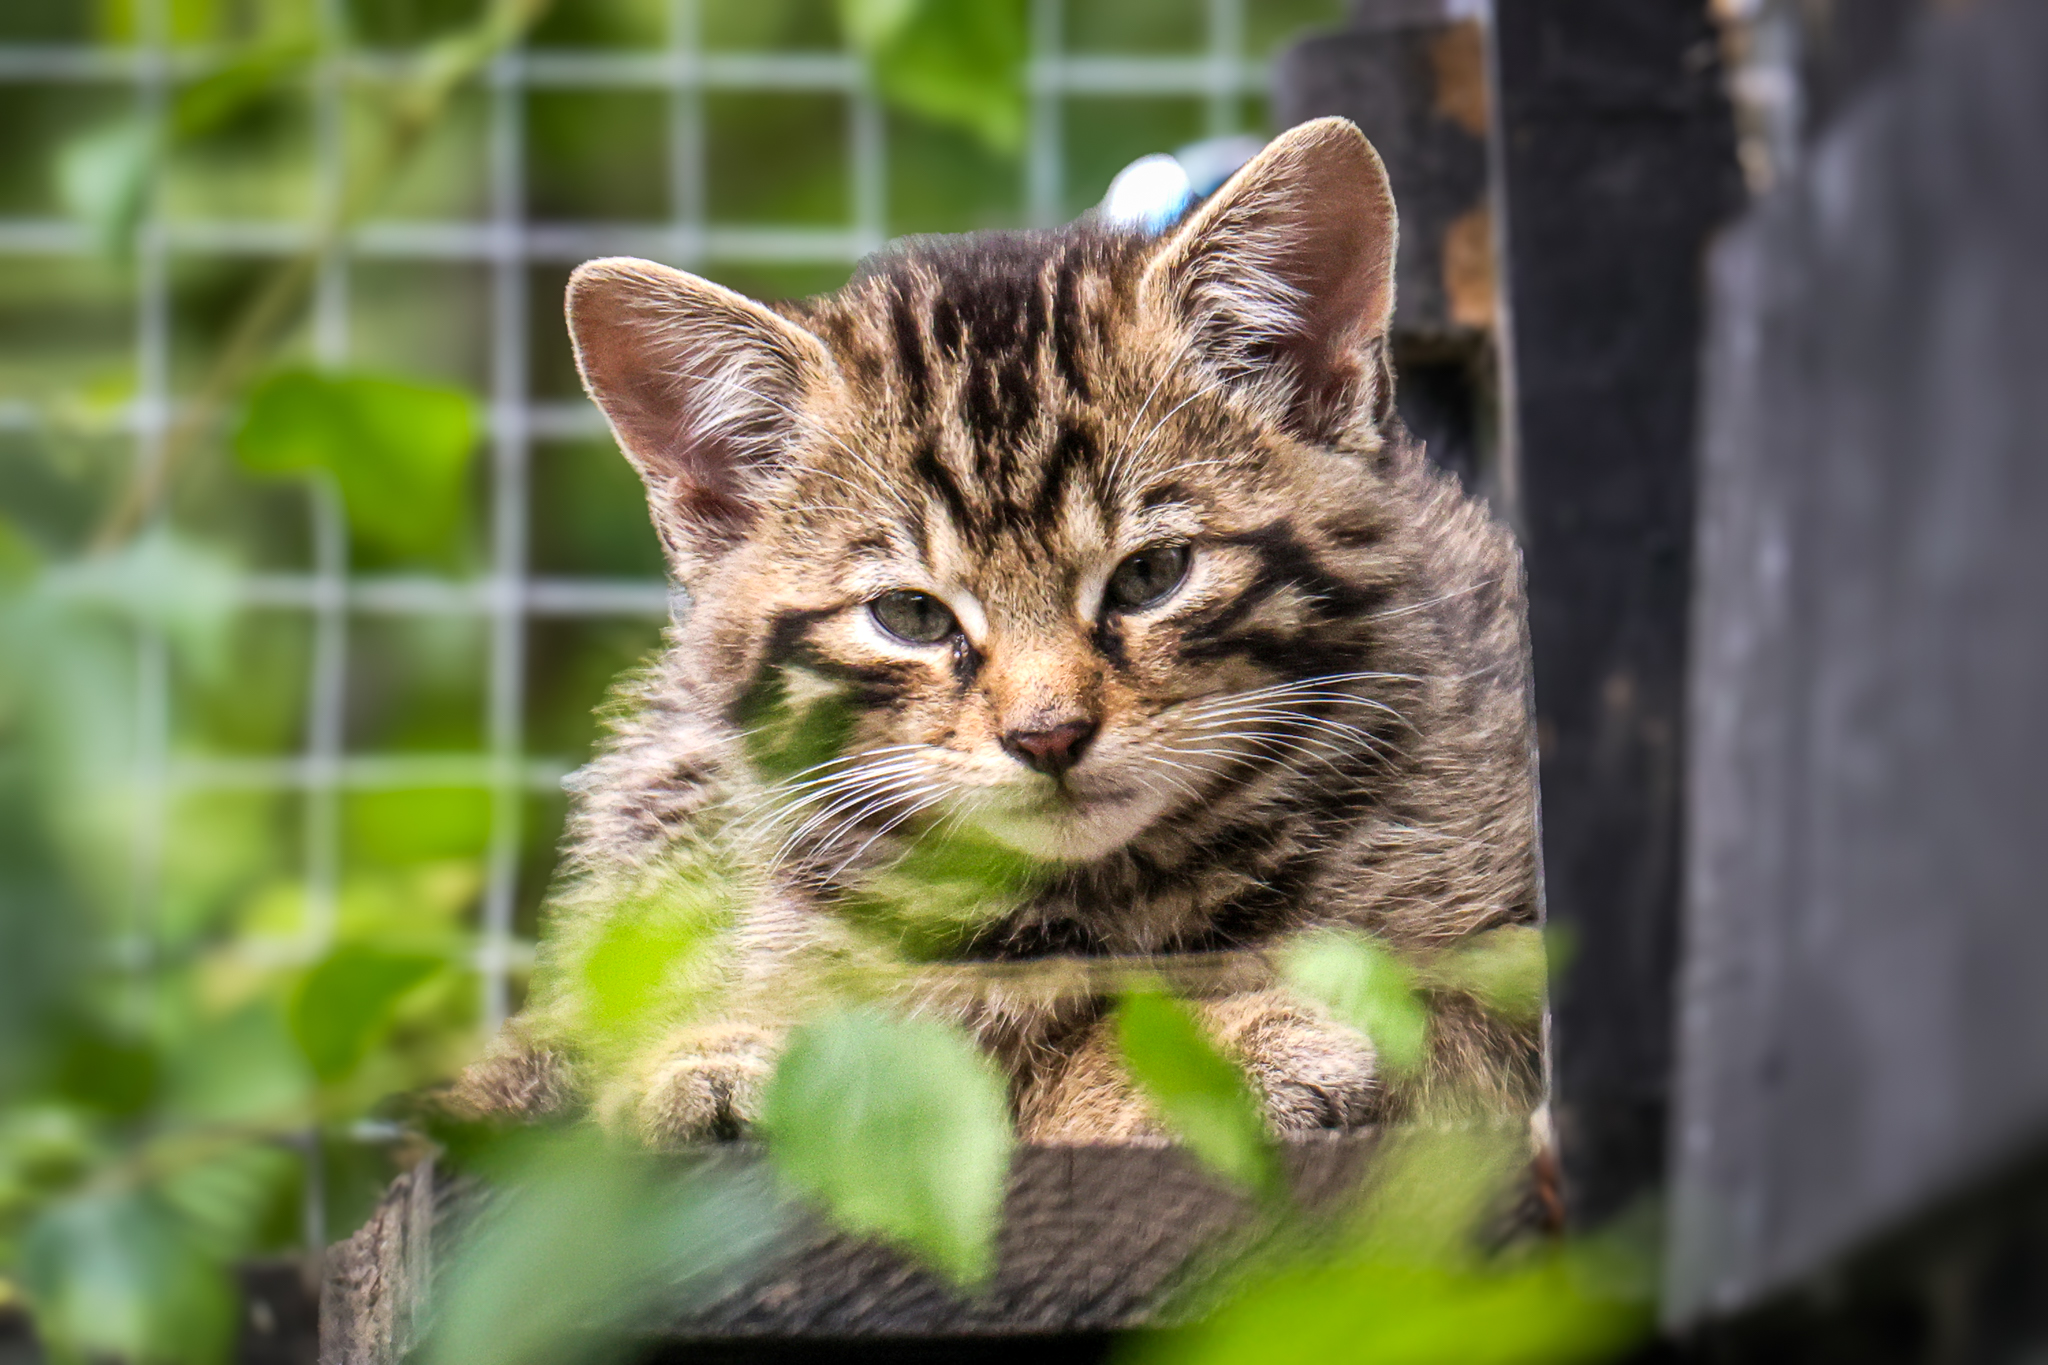 A wildcat kitten lying on a platform amid green foliage